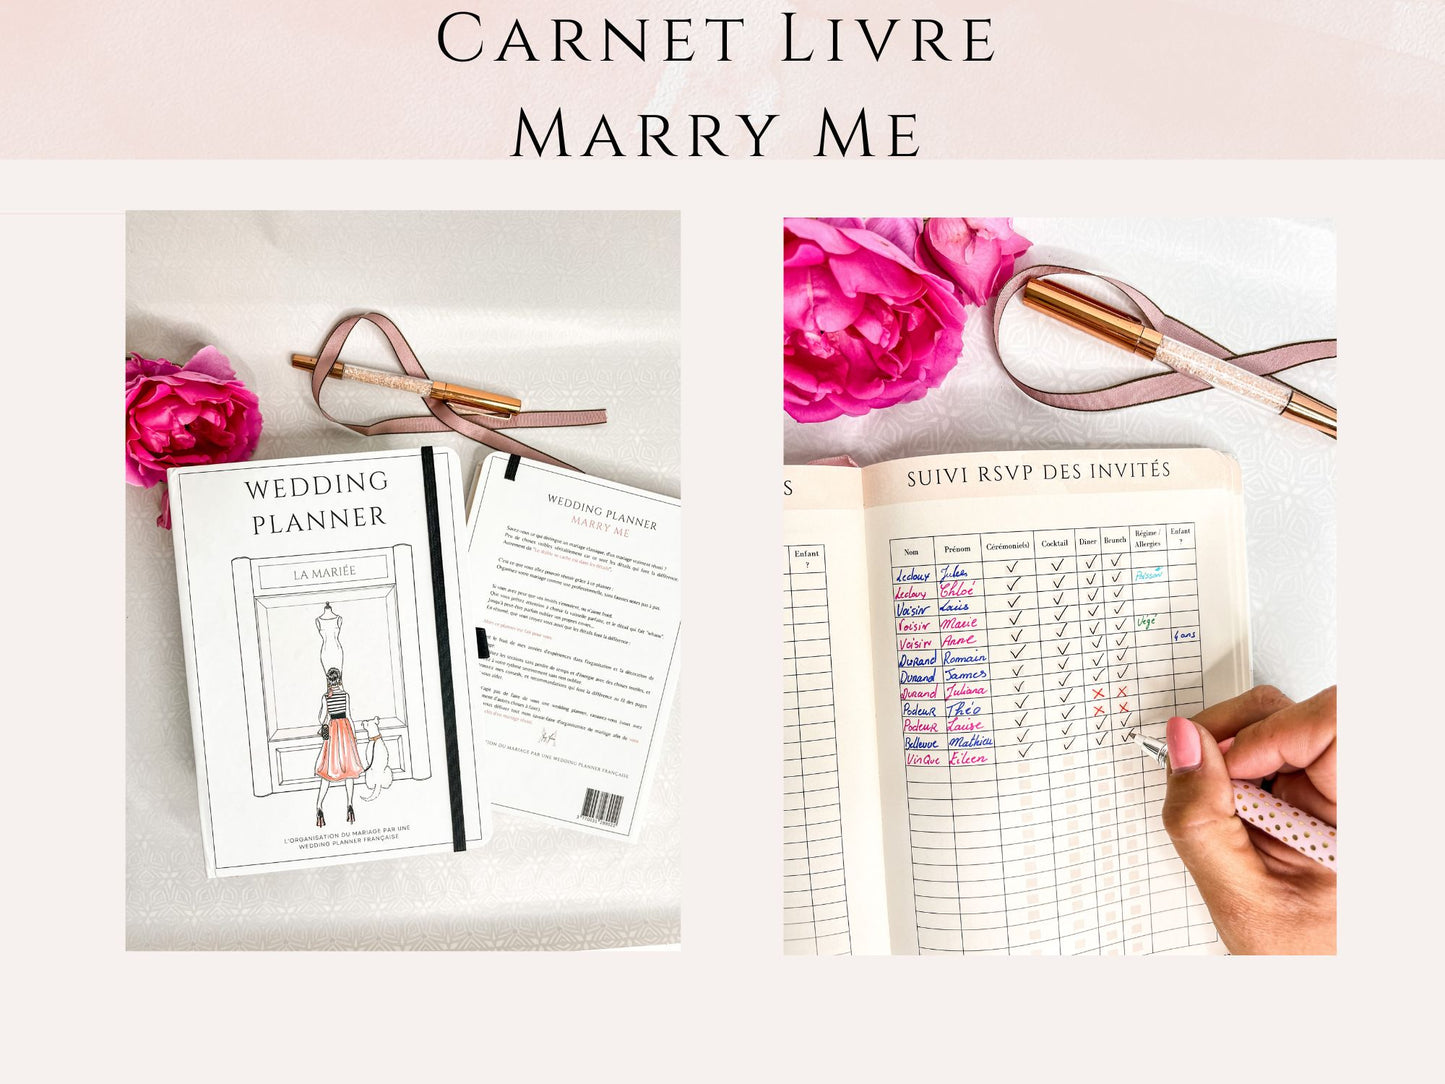 carnet-organisation-mariage-marry-me-organisateur-planificateur-journal-mariage